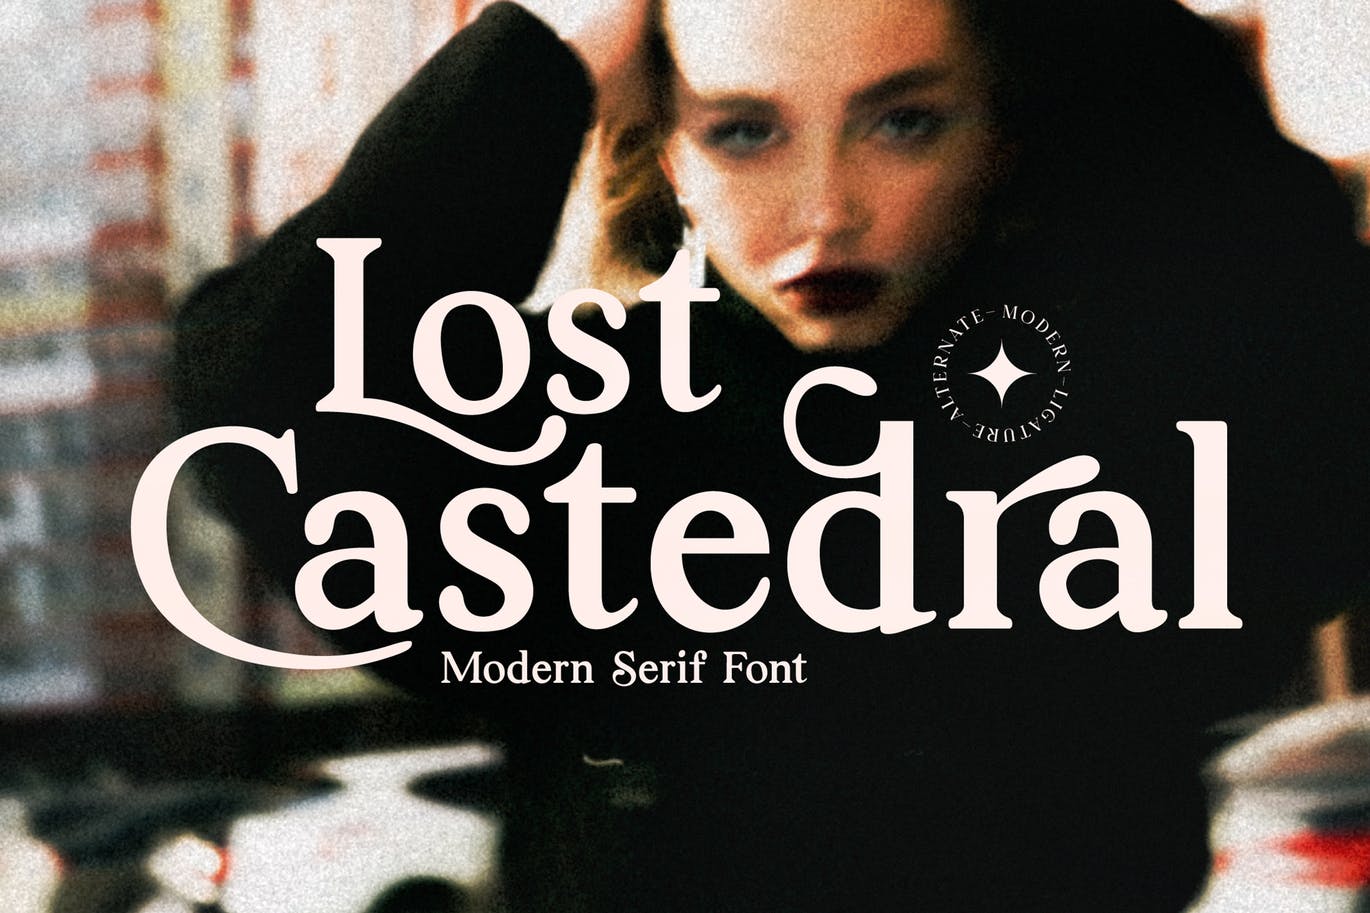 现代衬线字体素材 Lost Castedral Serif Font 设计素材 第1张